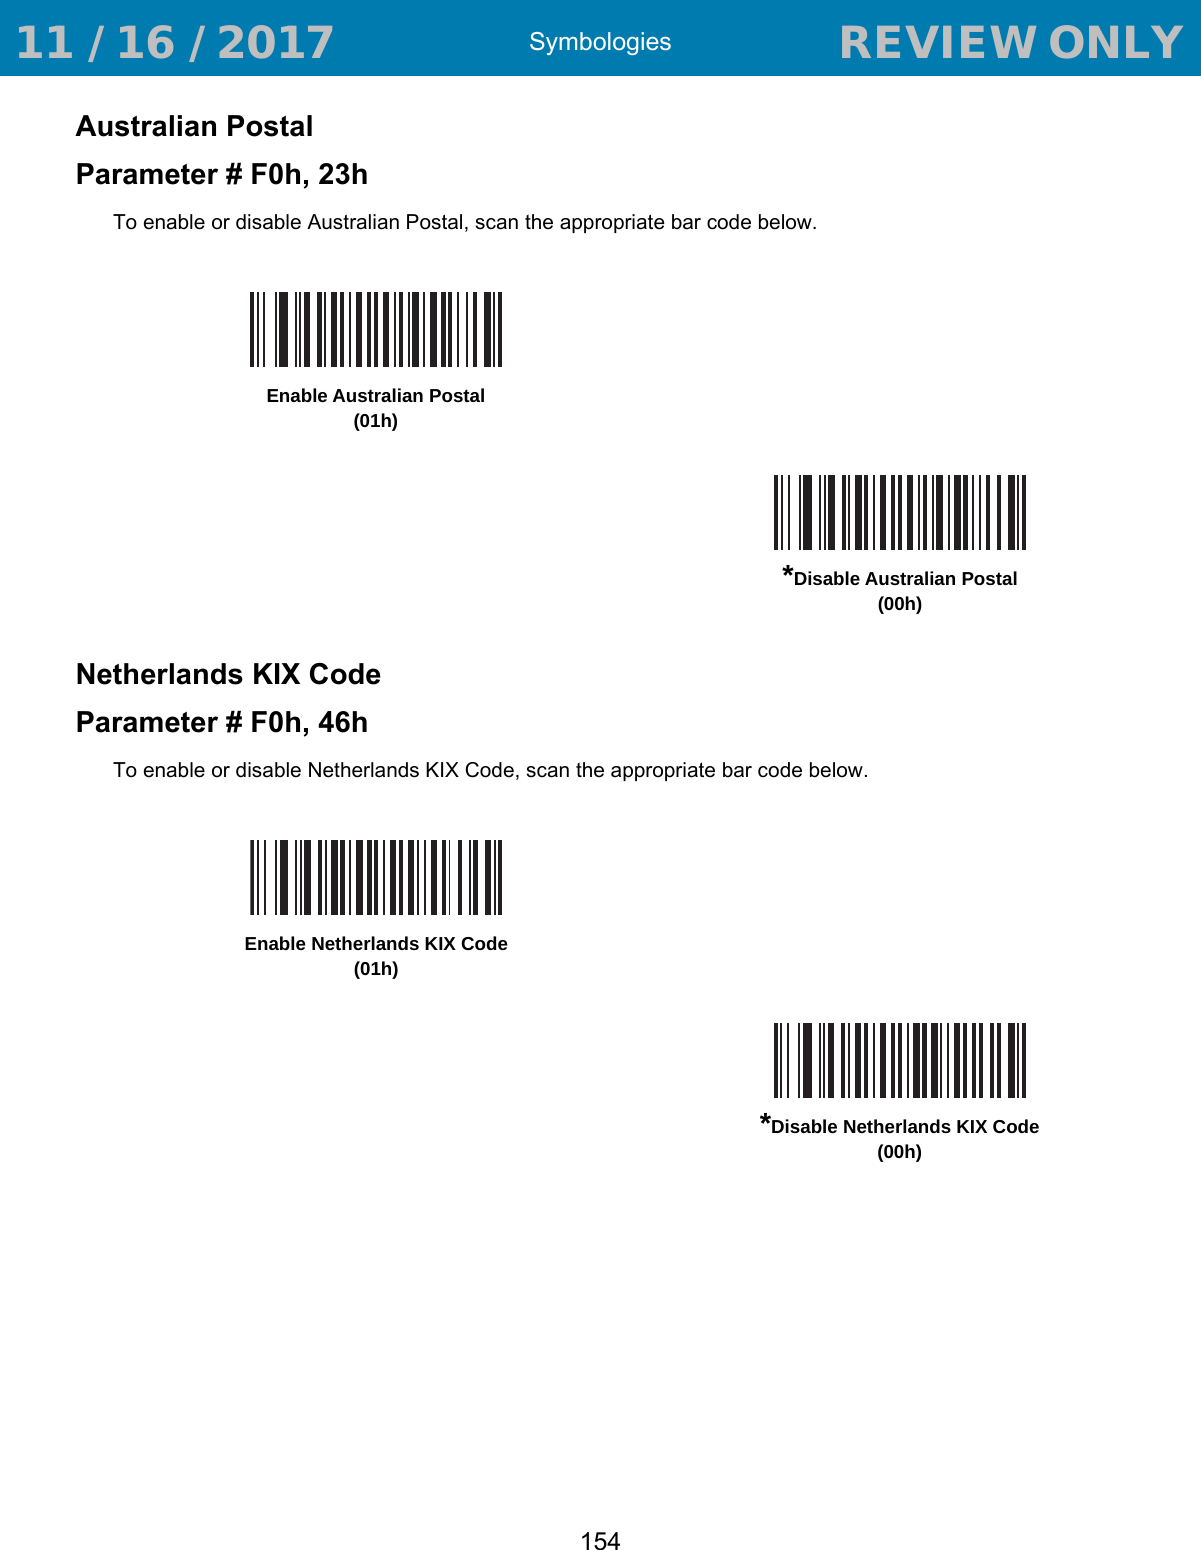 Symbologies154Australian PostalParameter # F0h, 23hTo enable or disable Australian Postal, scan the appropriate bar code below.Netherlands KIX Code Parameter # F0h, 46hTo enable or disable Netherlands KIX Code, scan the appropriate bar code below.Enable Australian Postal(01h)*Disable Australian Postal(00h)Enable Netherlands KIX Code(01h)*Disable Netherlands KIX Code(00h) 11 / 16 / 2017                                  REVIEW ONLY                             REVIEW ONLY - REVIEW ONLY - REVIEW ONLY